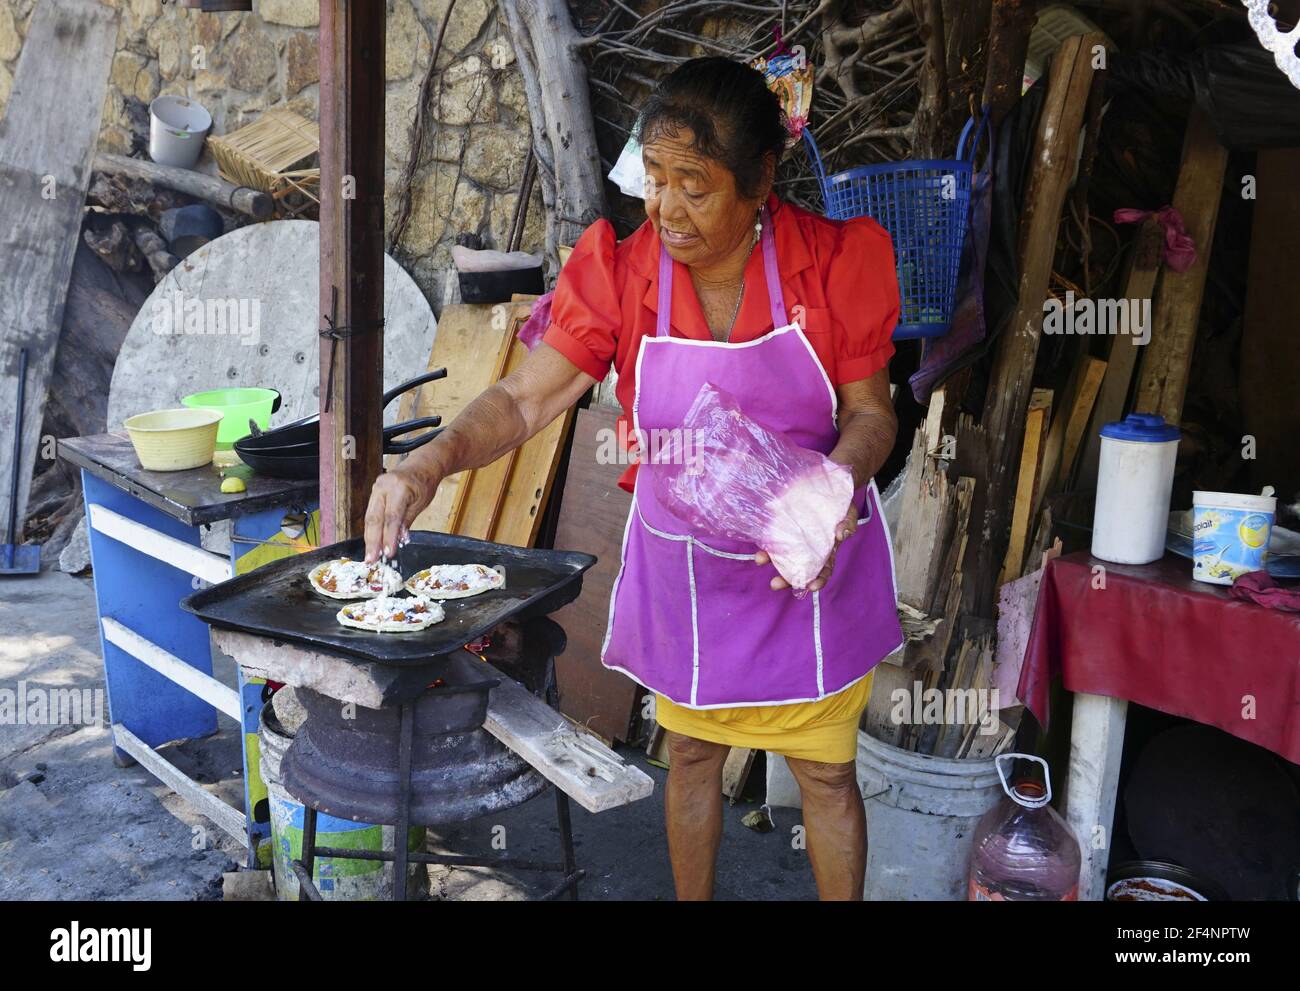 Female hispanic street vendor making sopes in Acapulco, Mexico. Stock Photo